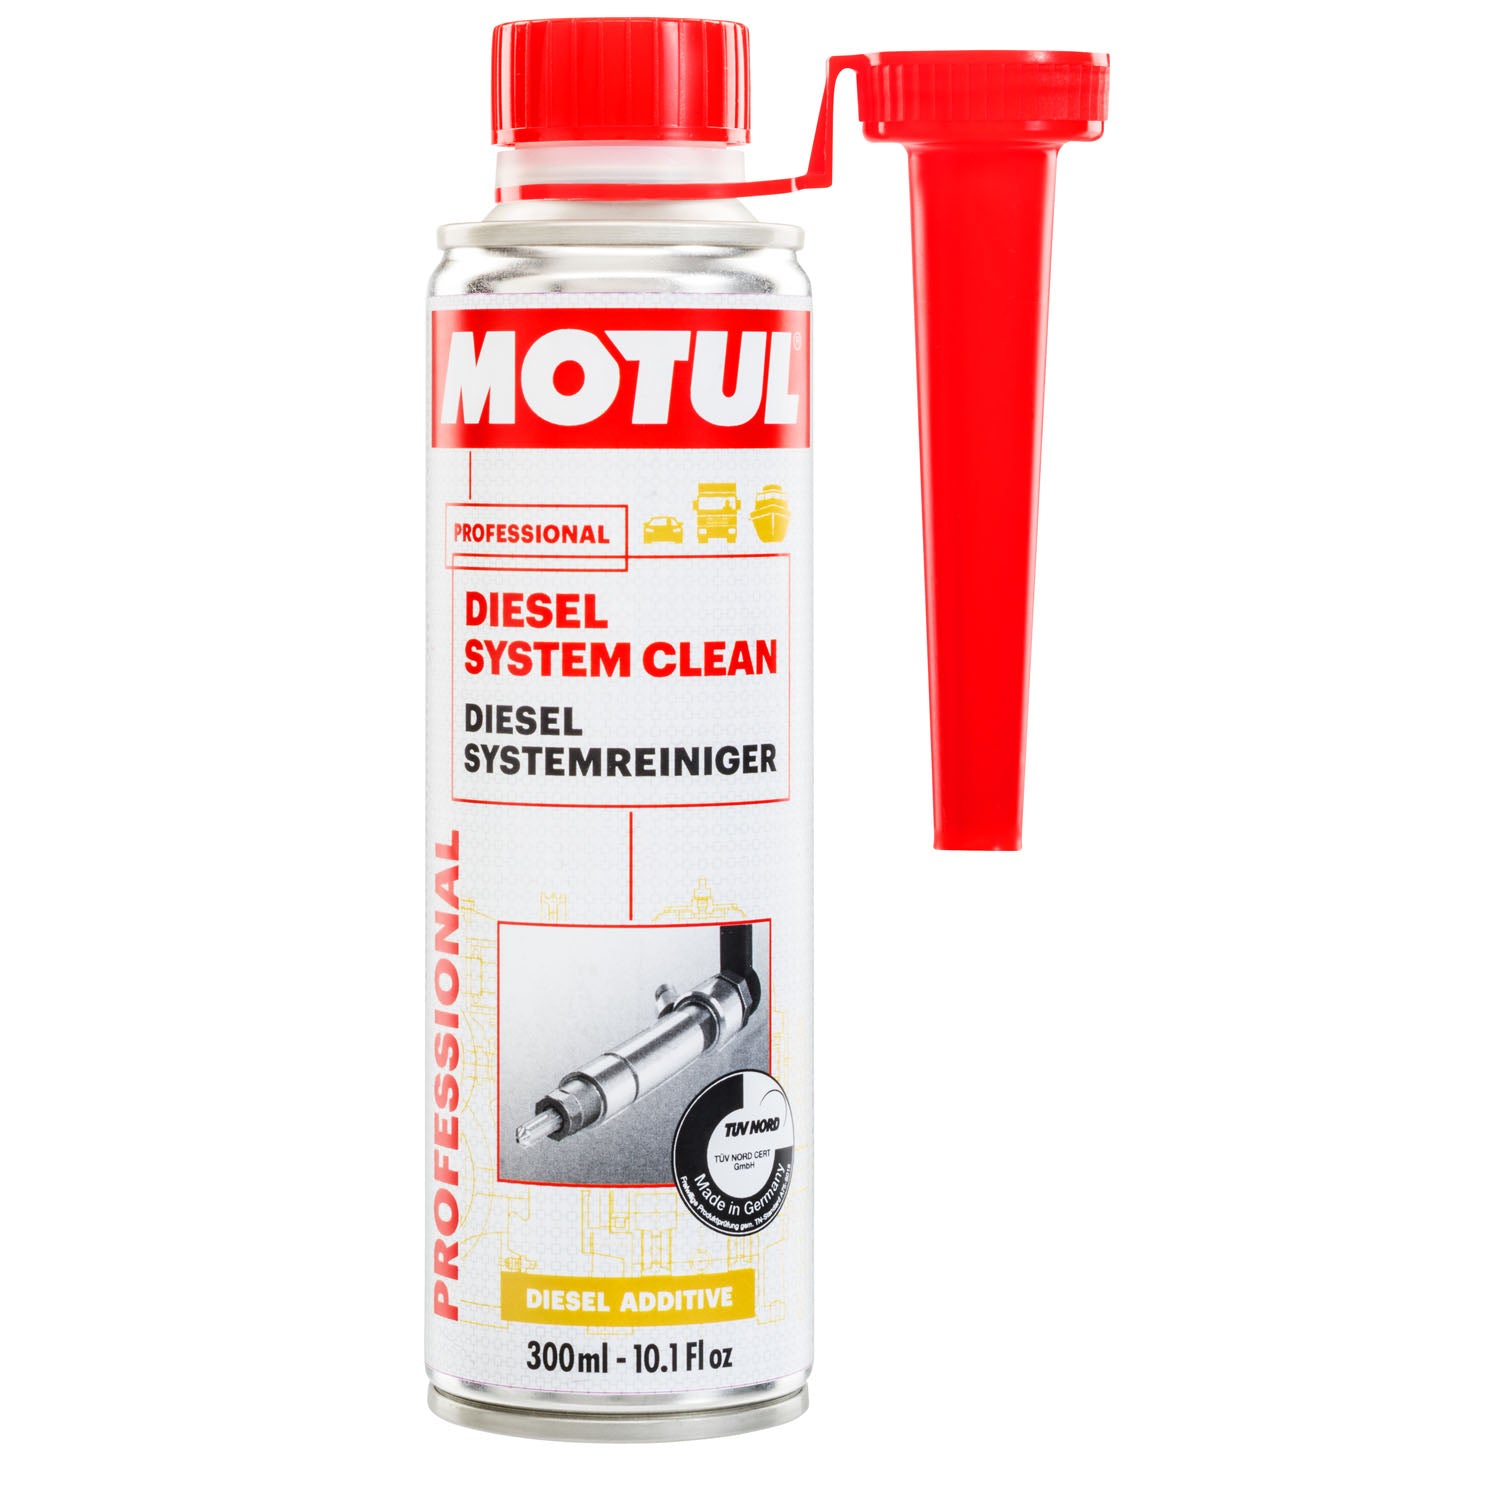 Motul Professional Diesel System Clean Additive - 300ml